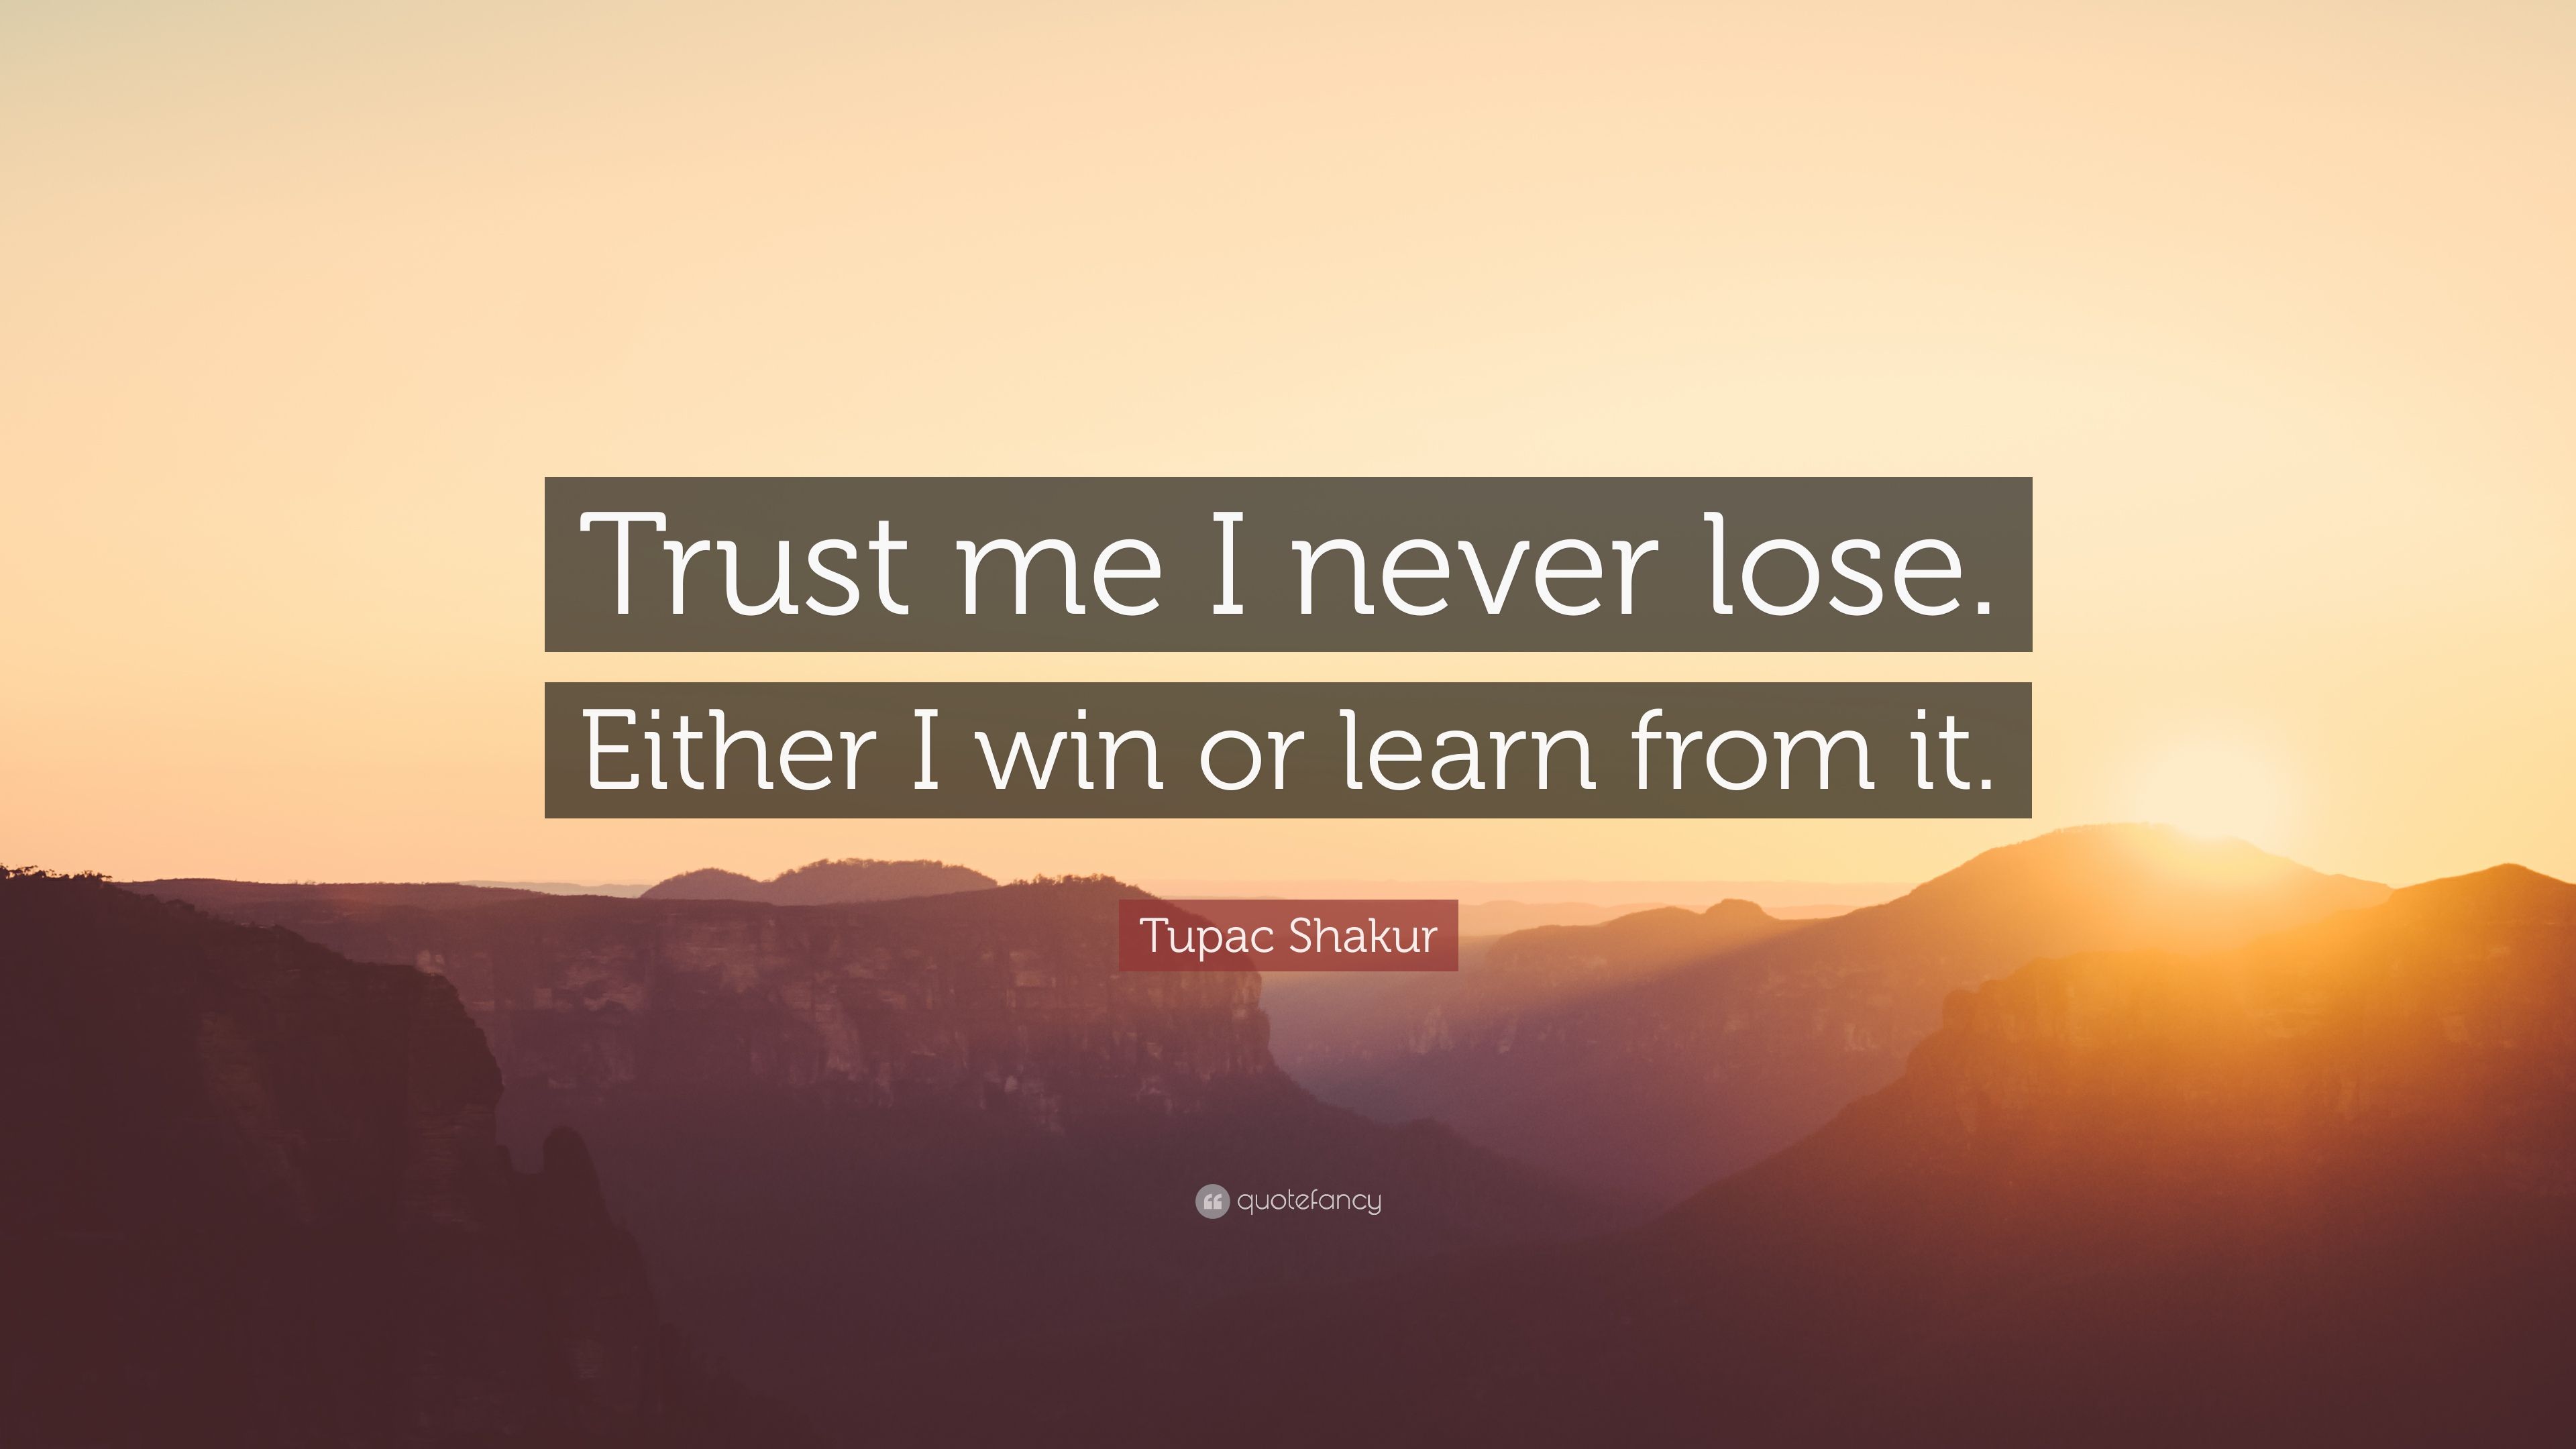 Tupac Shakur Quote: "Trust me I never lose. 